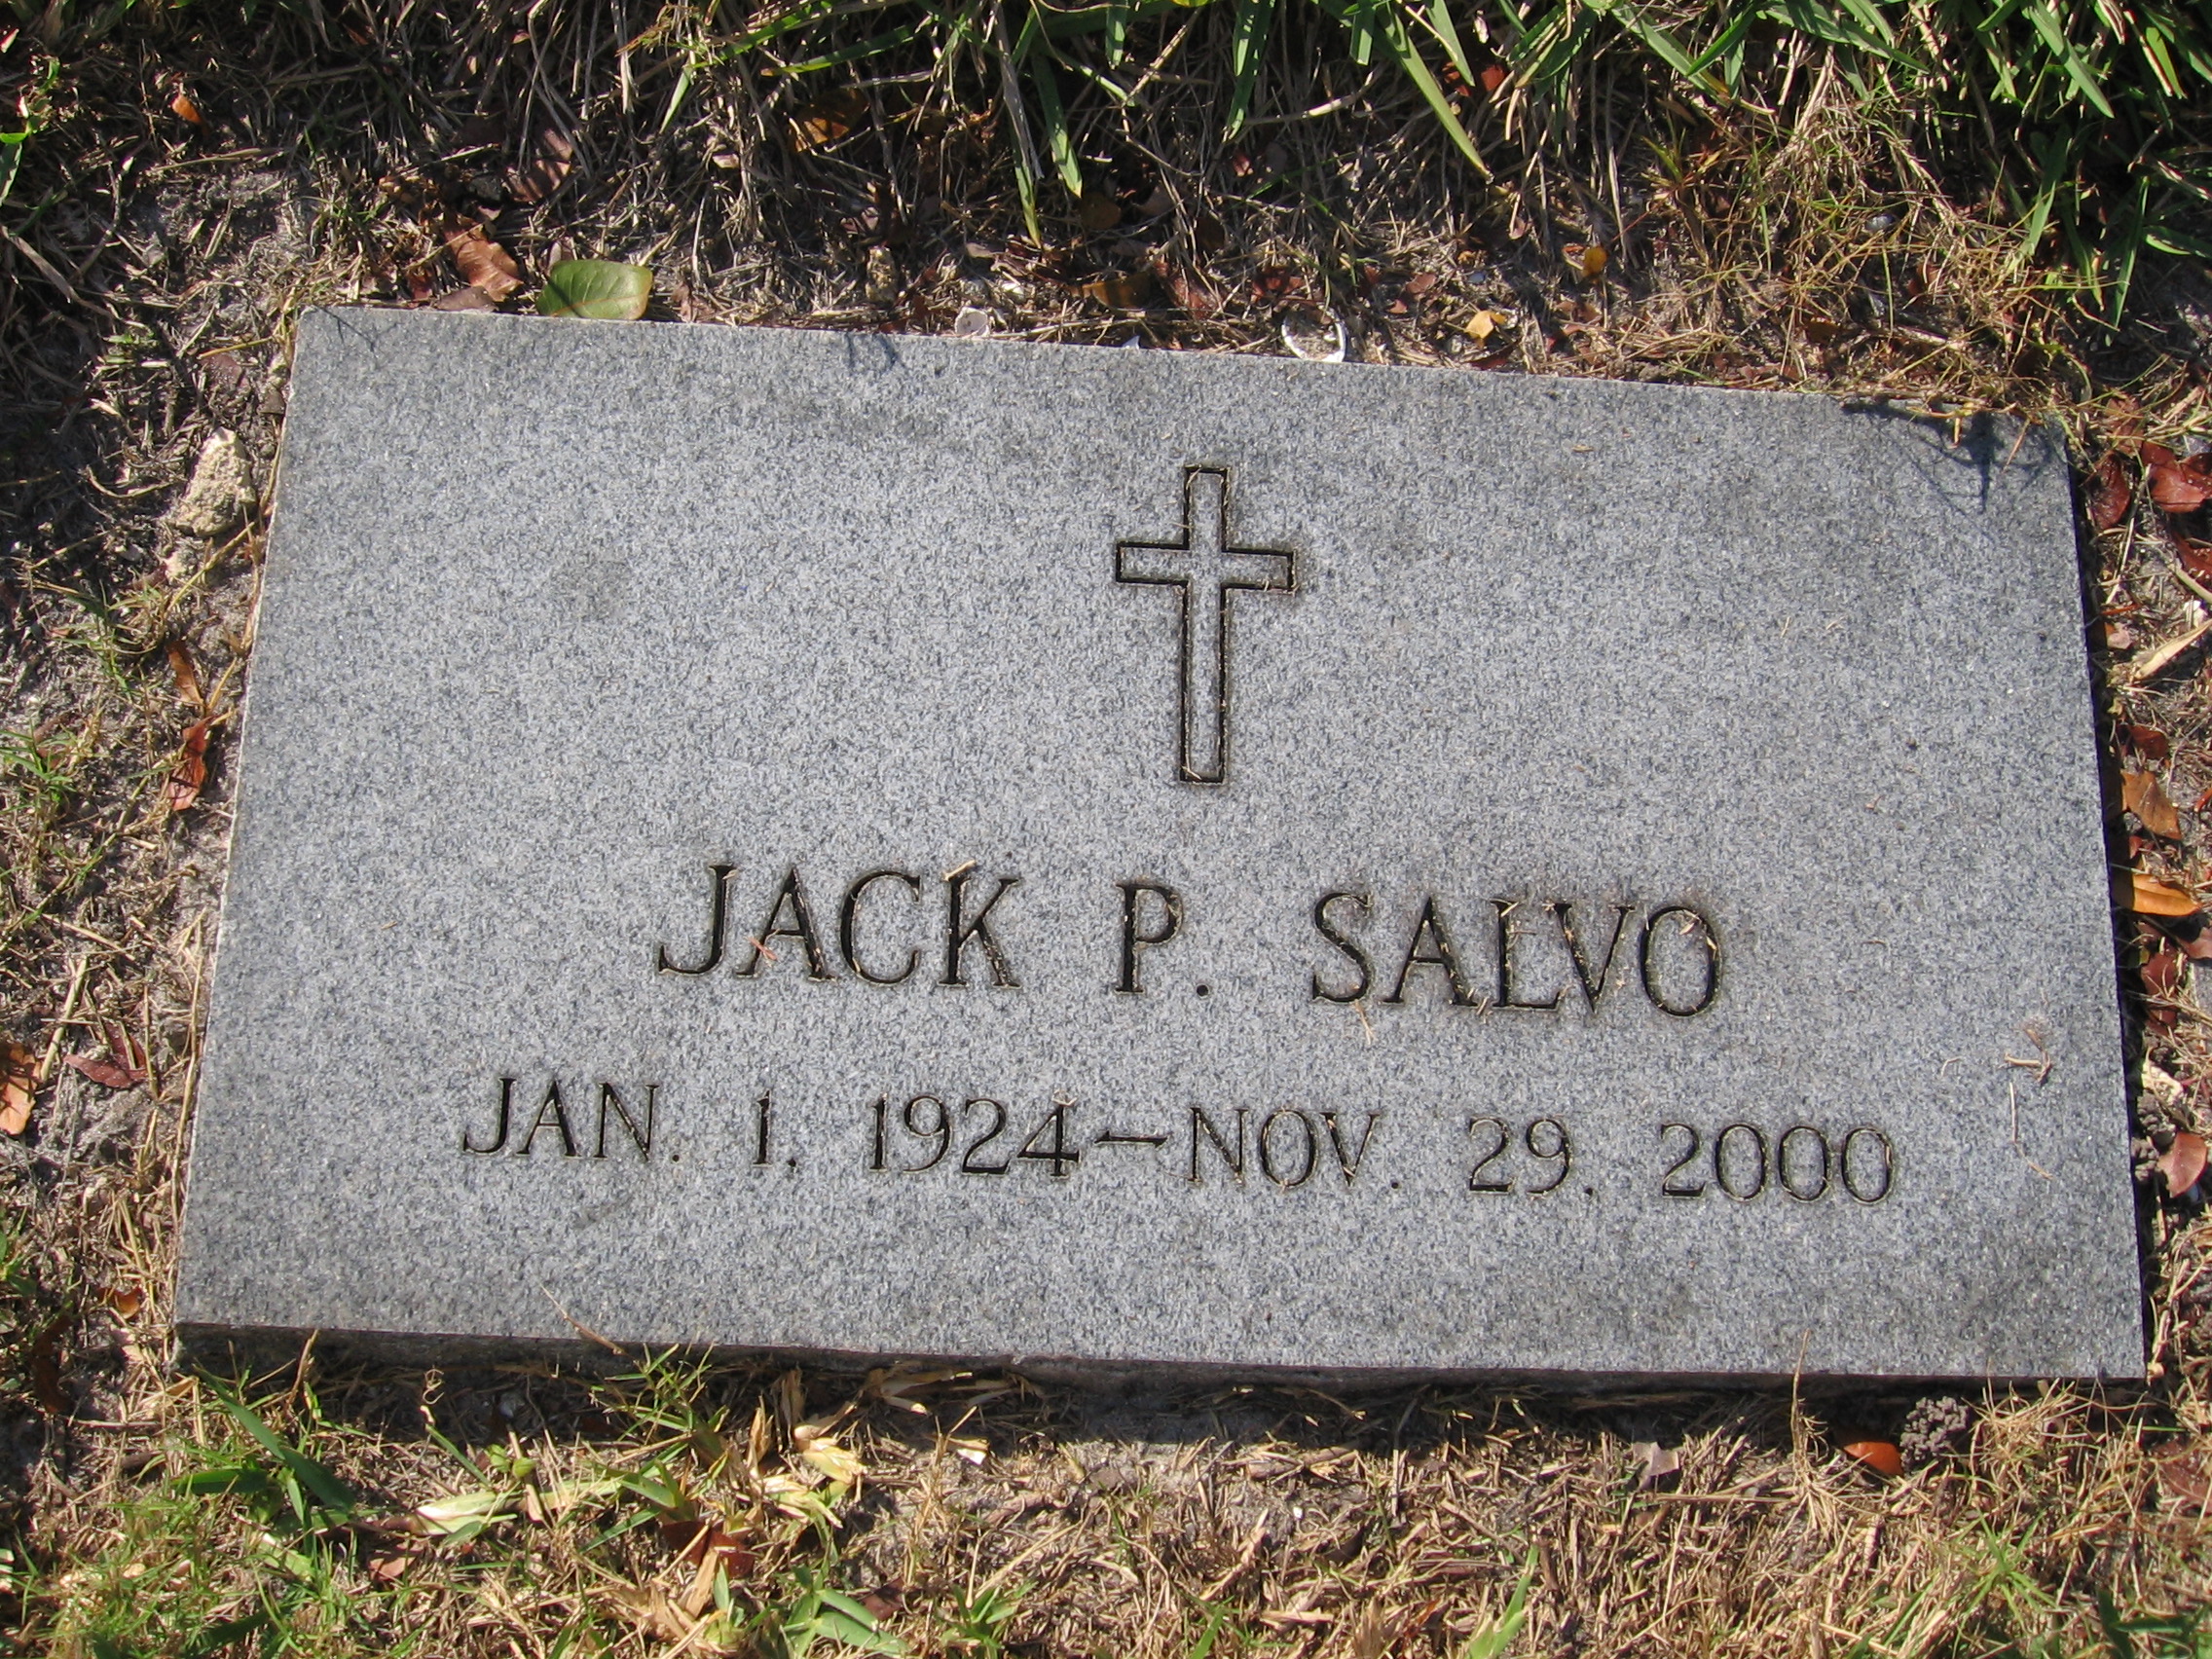 Jack P Salvo